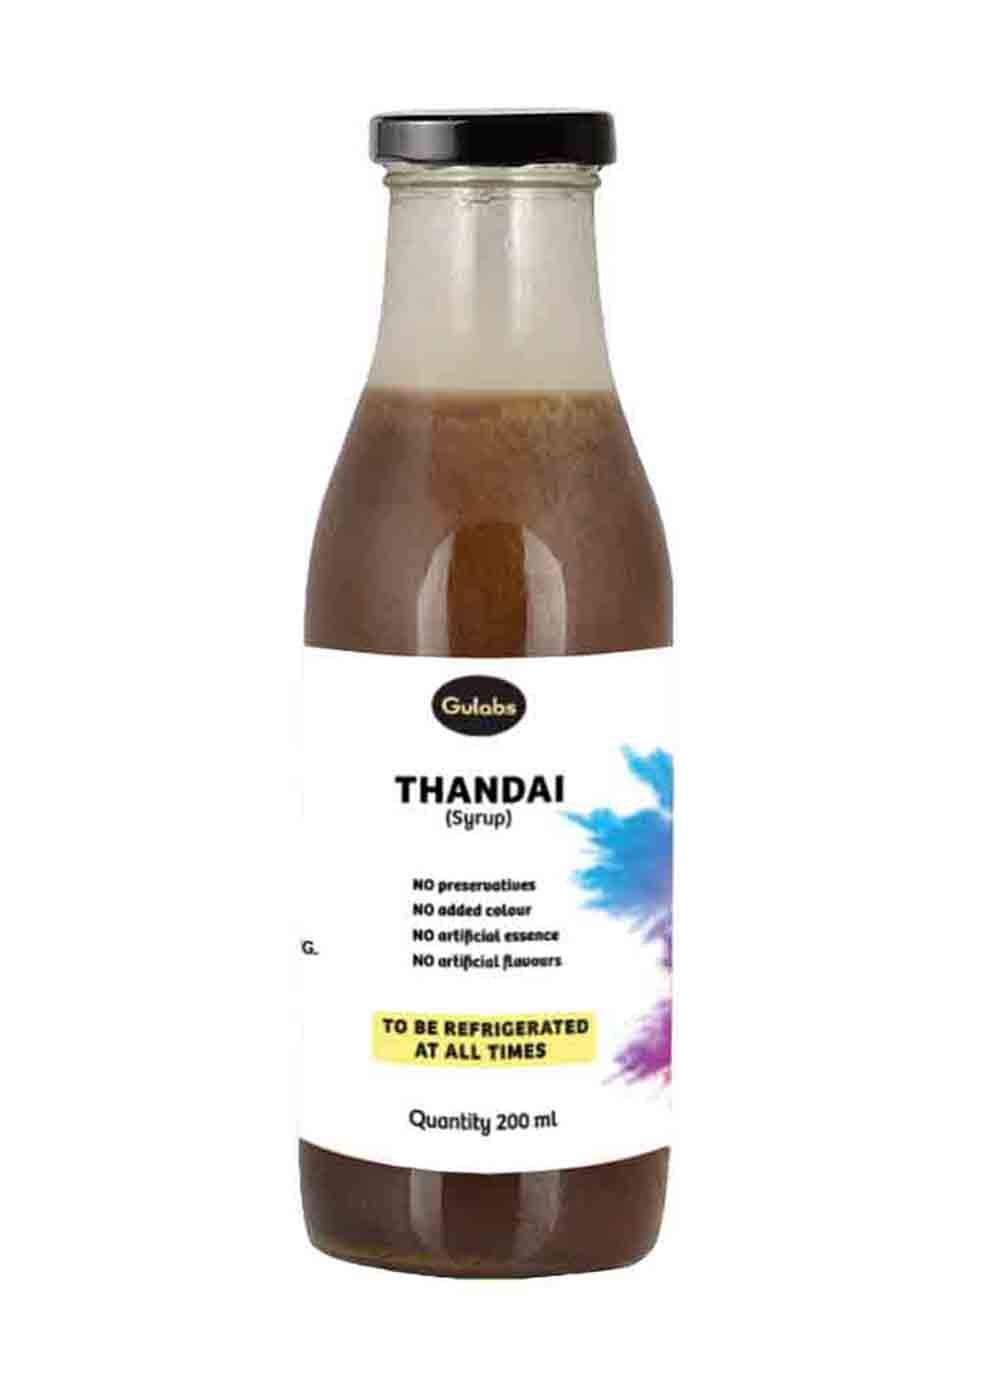  Mini Thandai - 200 ml